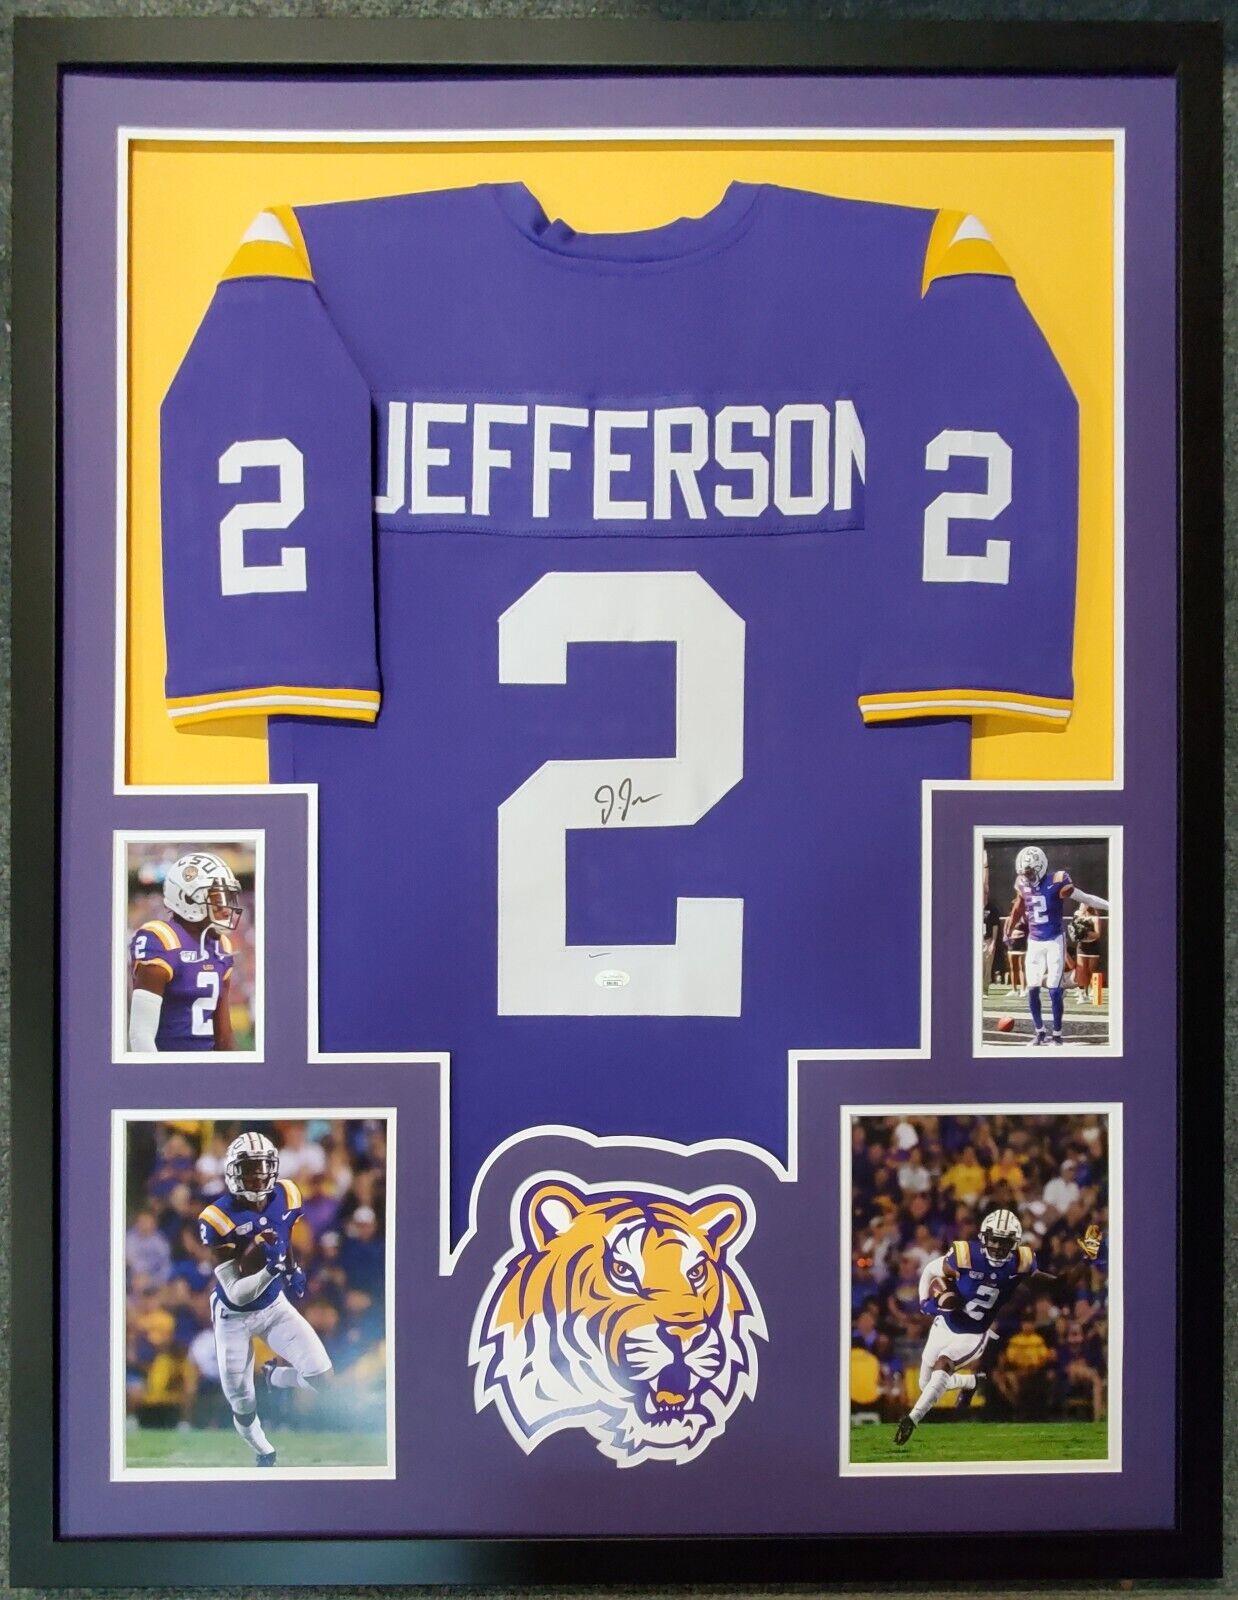 MVP Authentics Framed Lsu Tigers Justin Jefferson Autographed Signed Jersey Jsa Coa 765 sports jersey framing , jersey framing